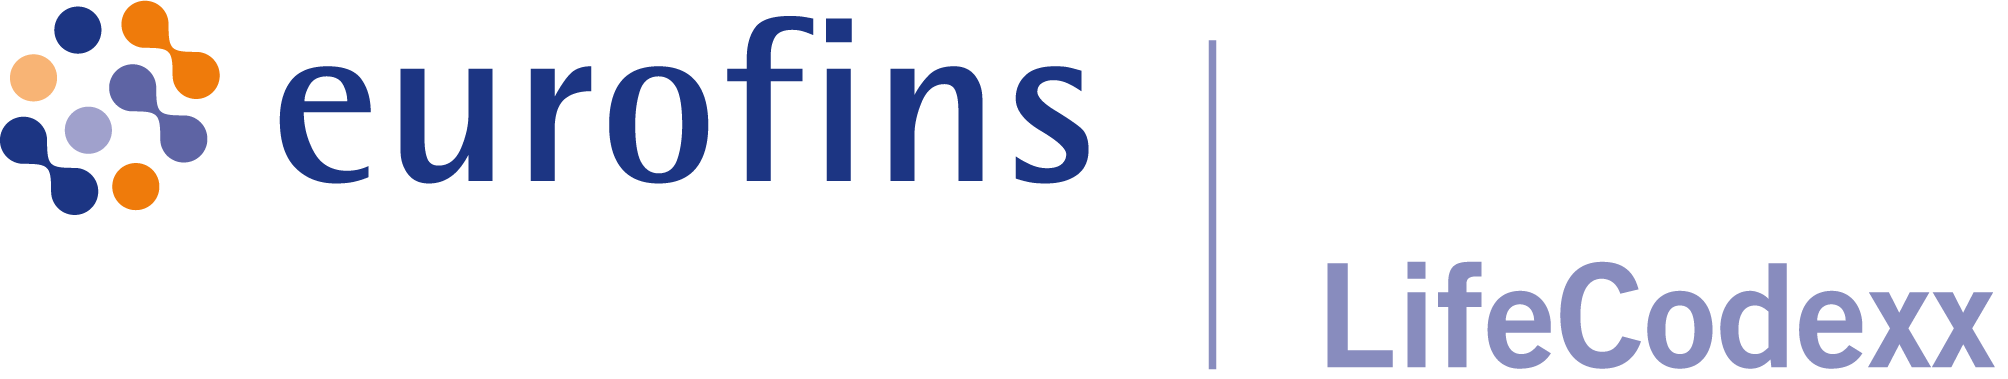 Eurofins/ LifeCodexx Logo